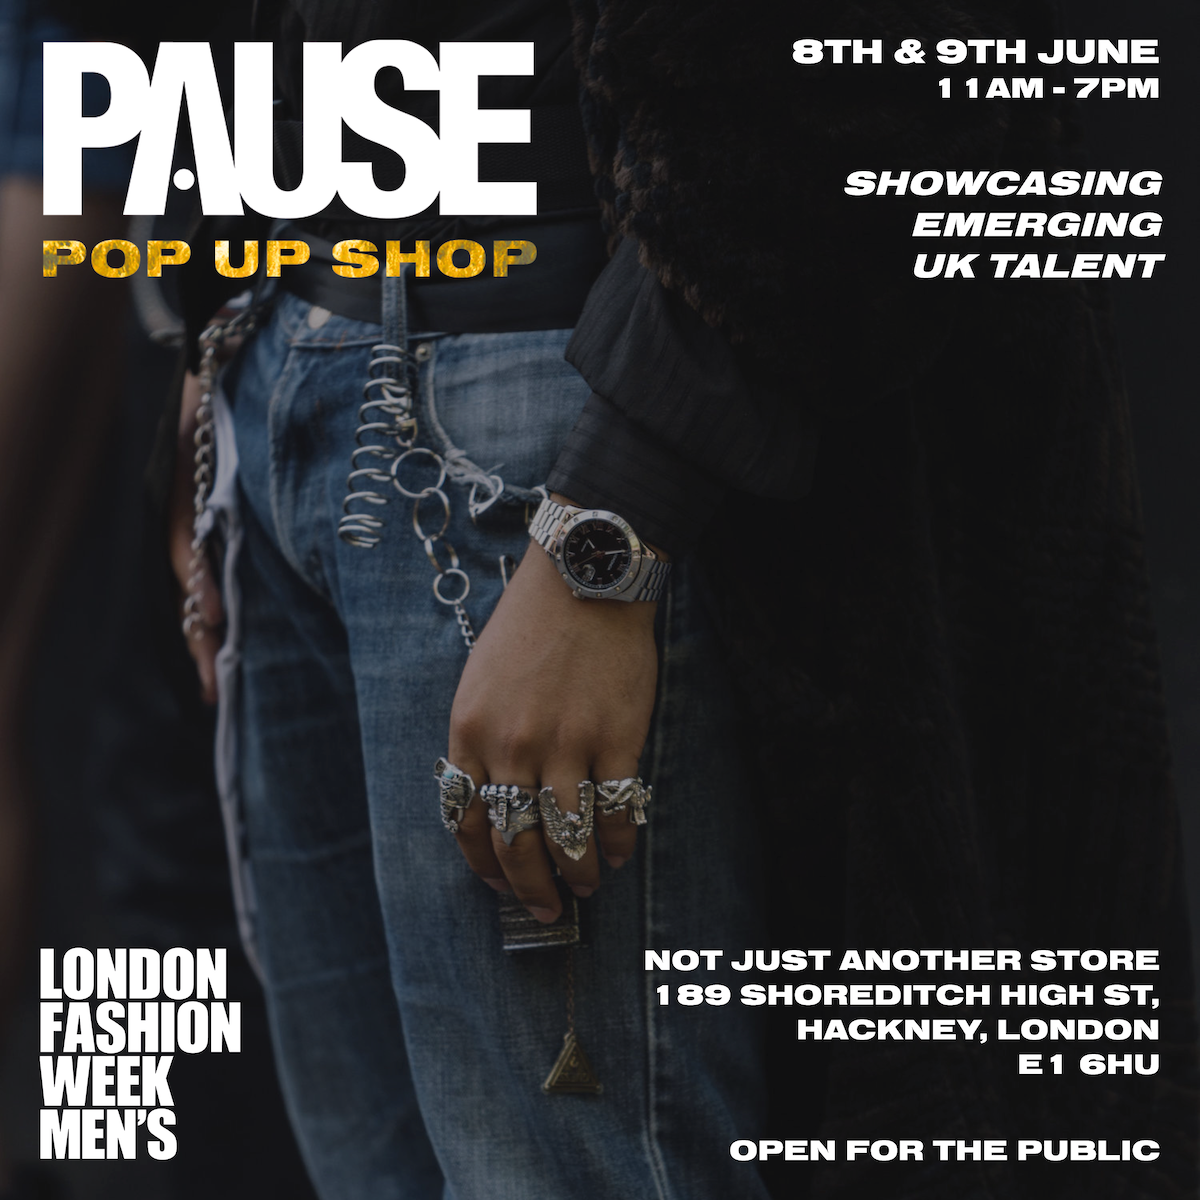 PAUSE Pop-Up Shop at London Fashion Week Men’s